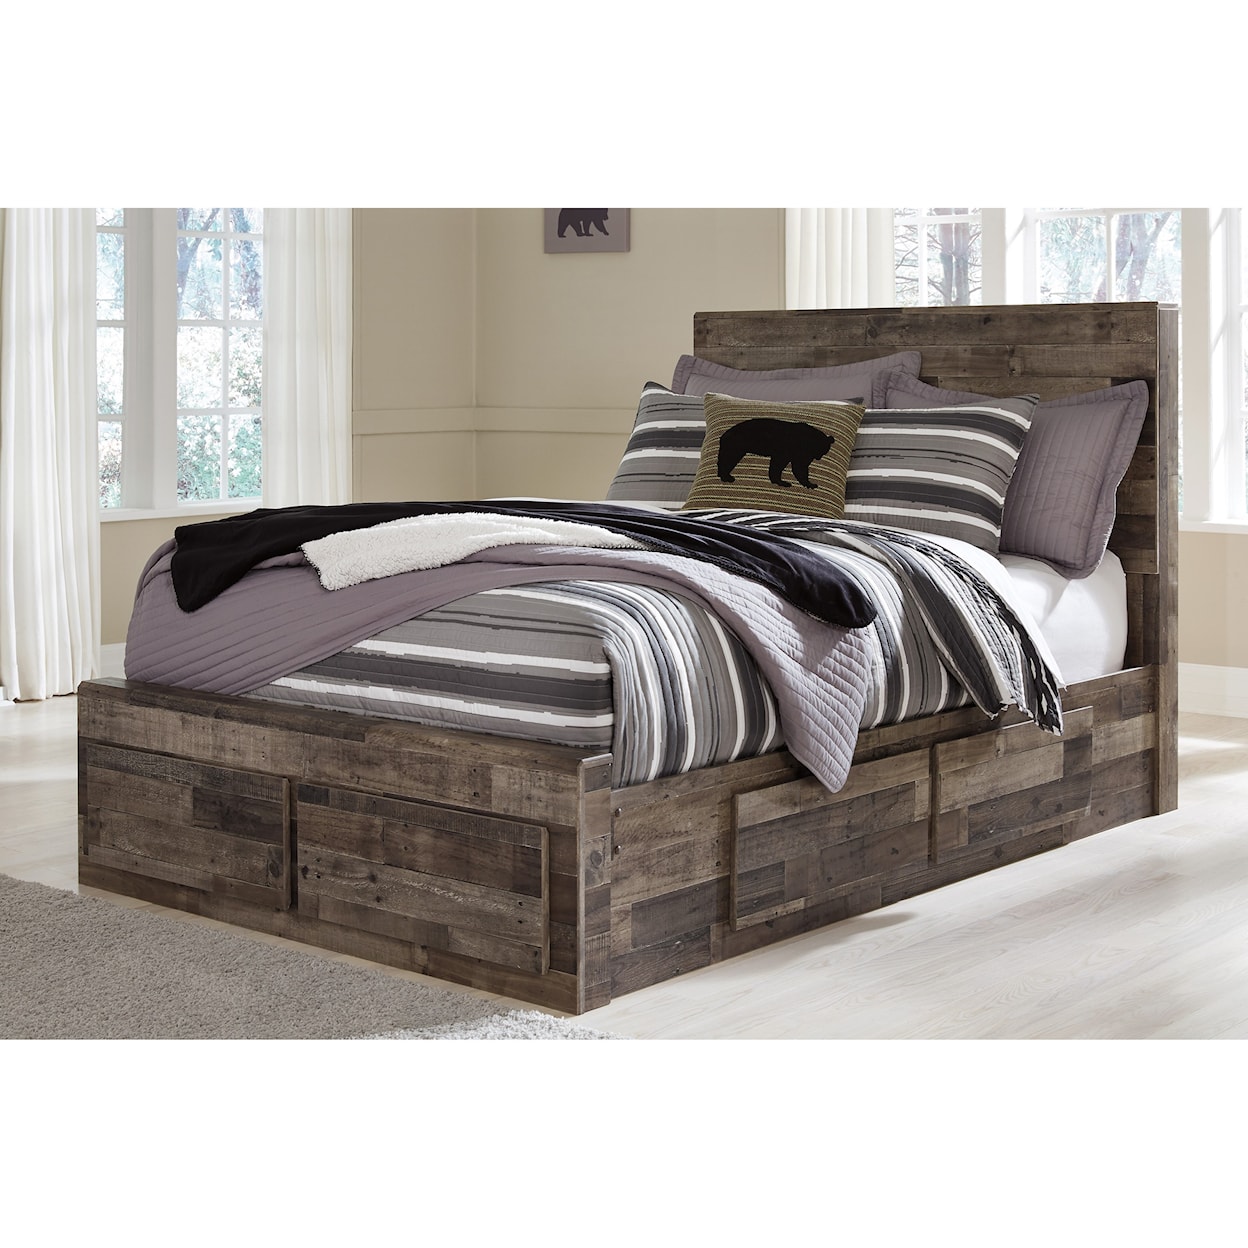 Ashley Furniture Benchcraft Derekson Full Storage Bed with 6 Drawers